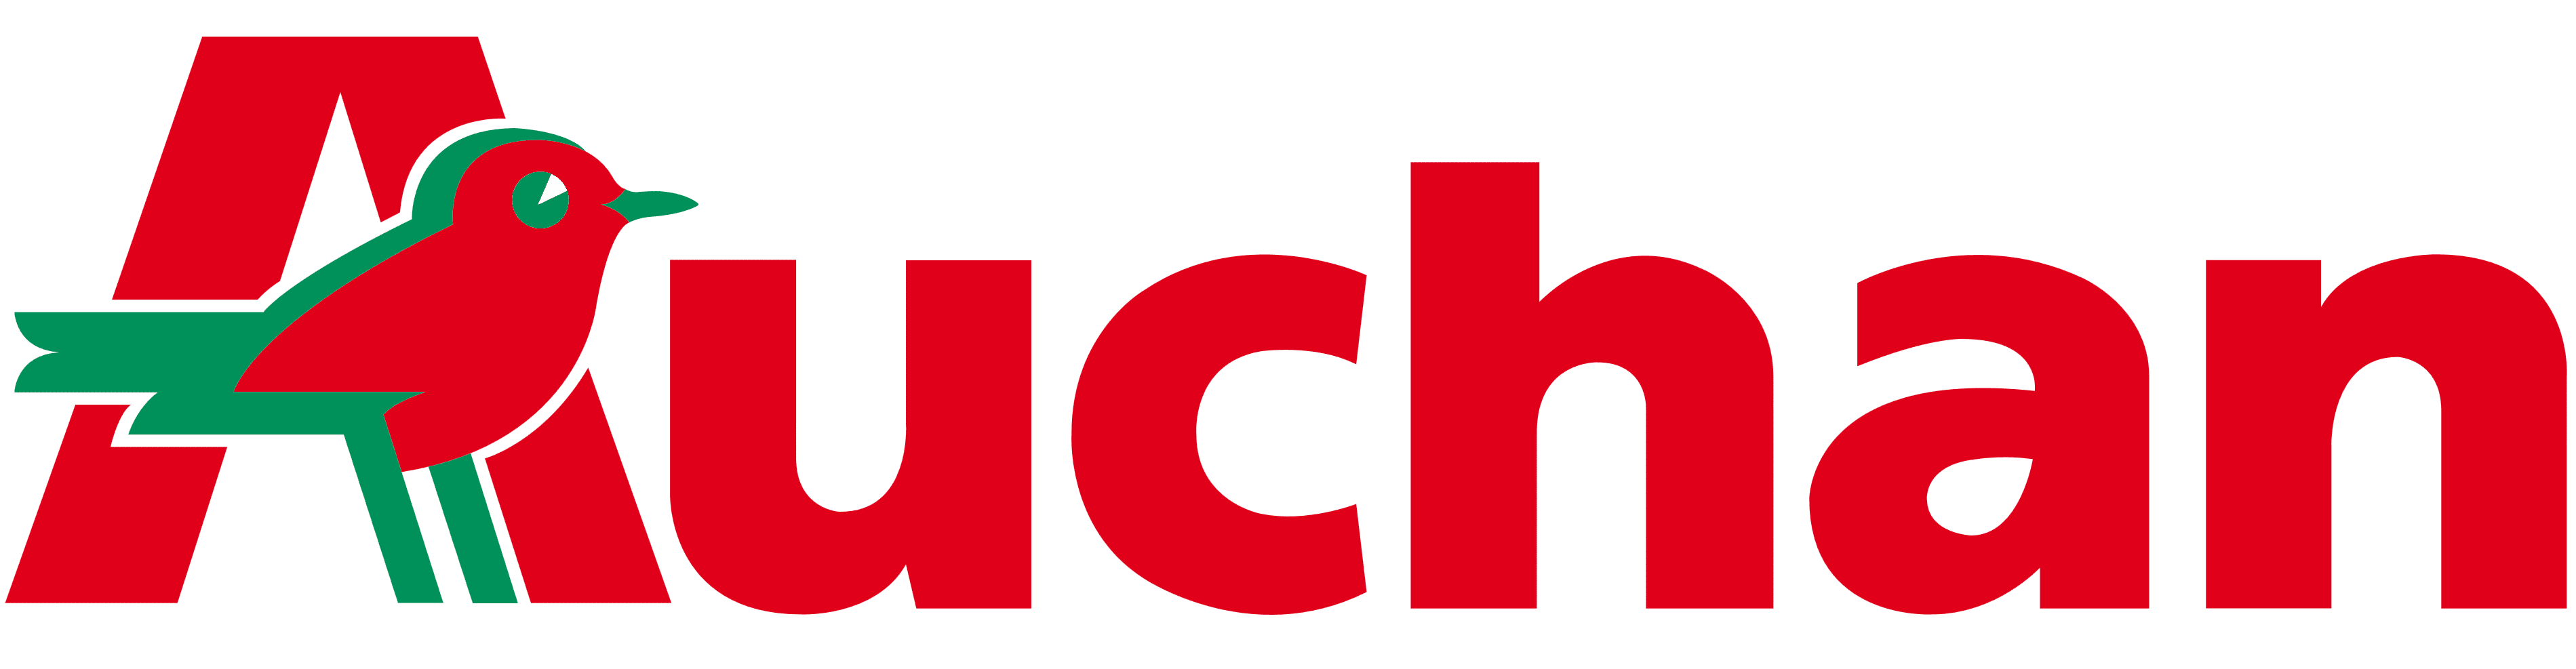 Auchan_logo